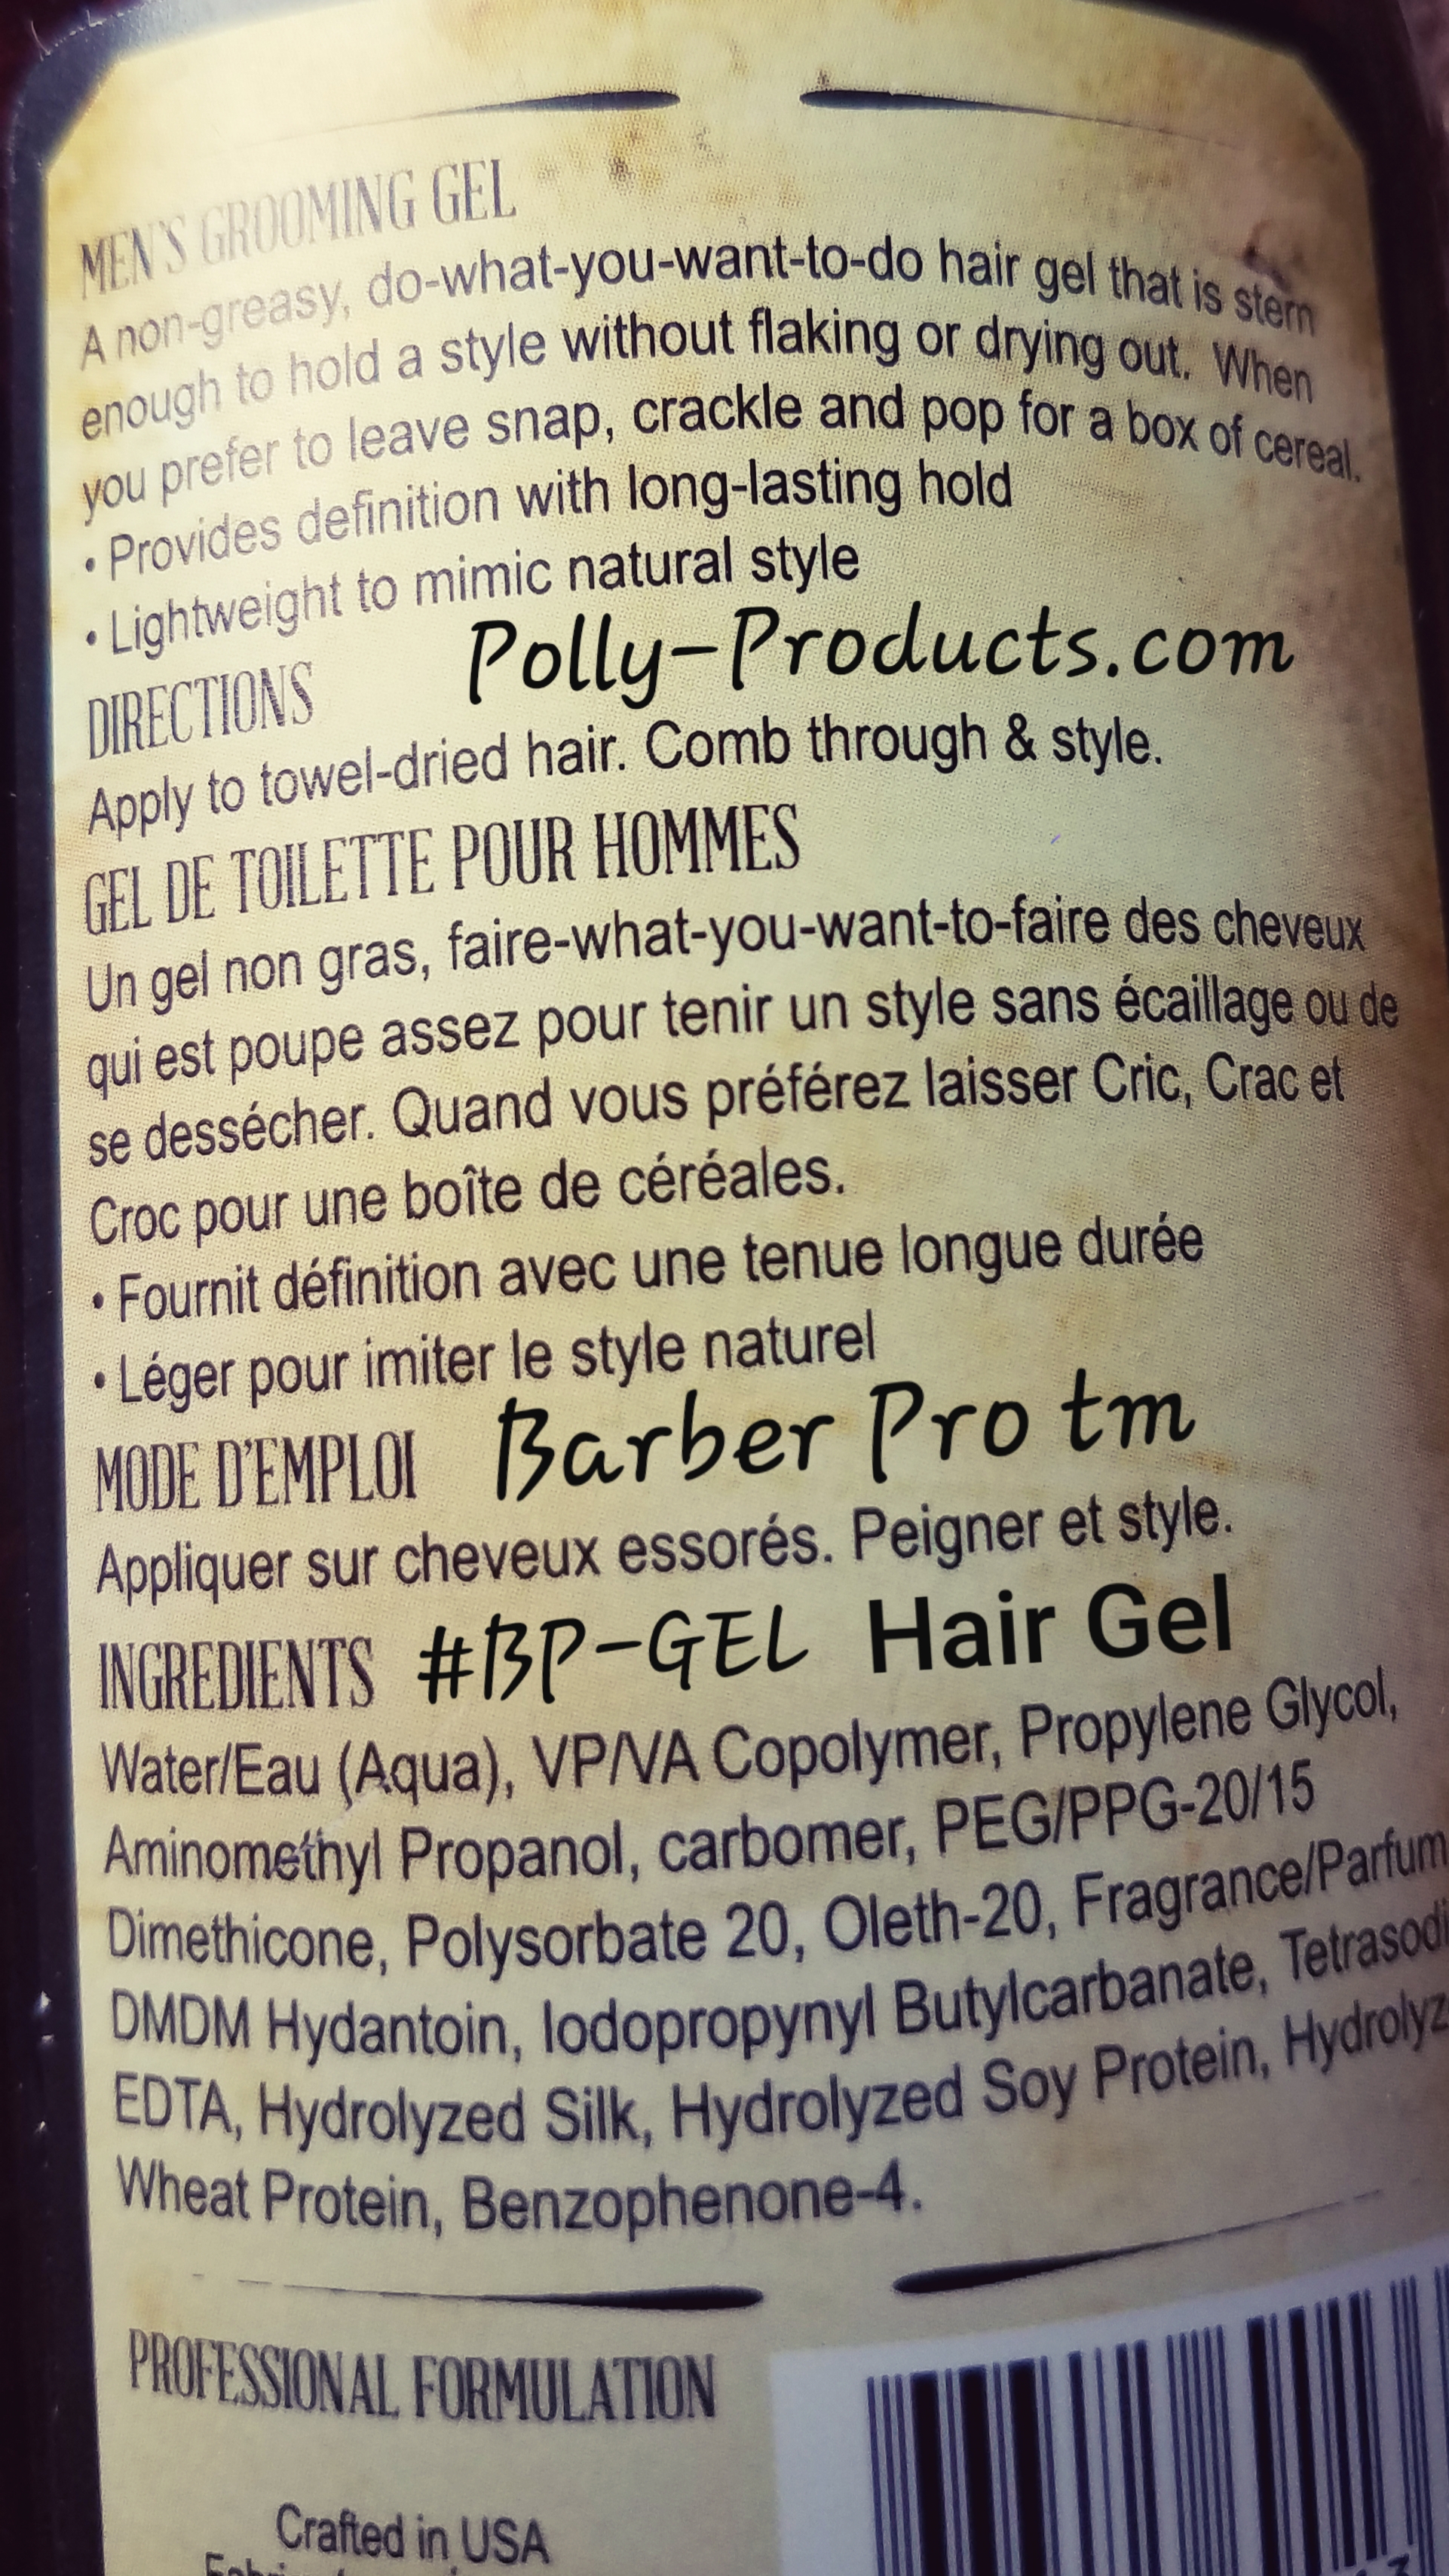 #BP-GEL MEN'S HAIR GEL 8.4 OZ FROM BARBER PRO